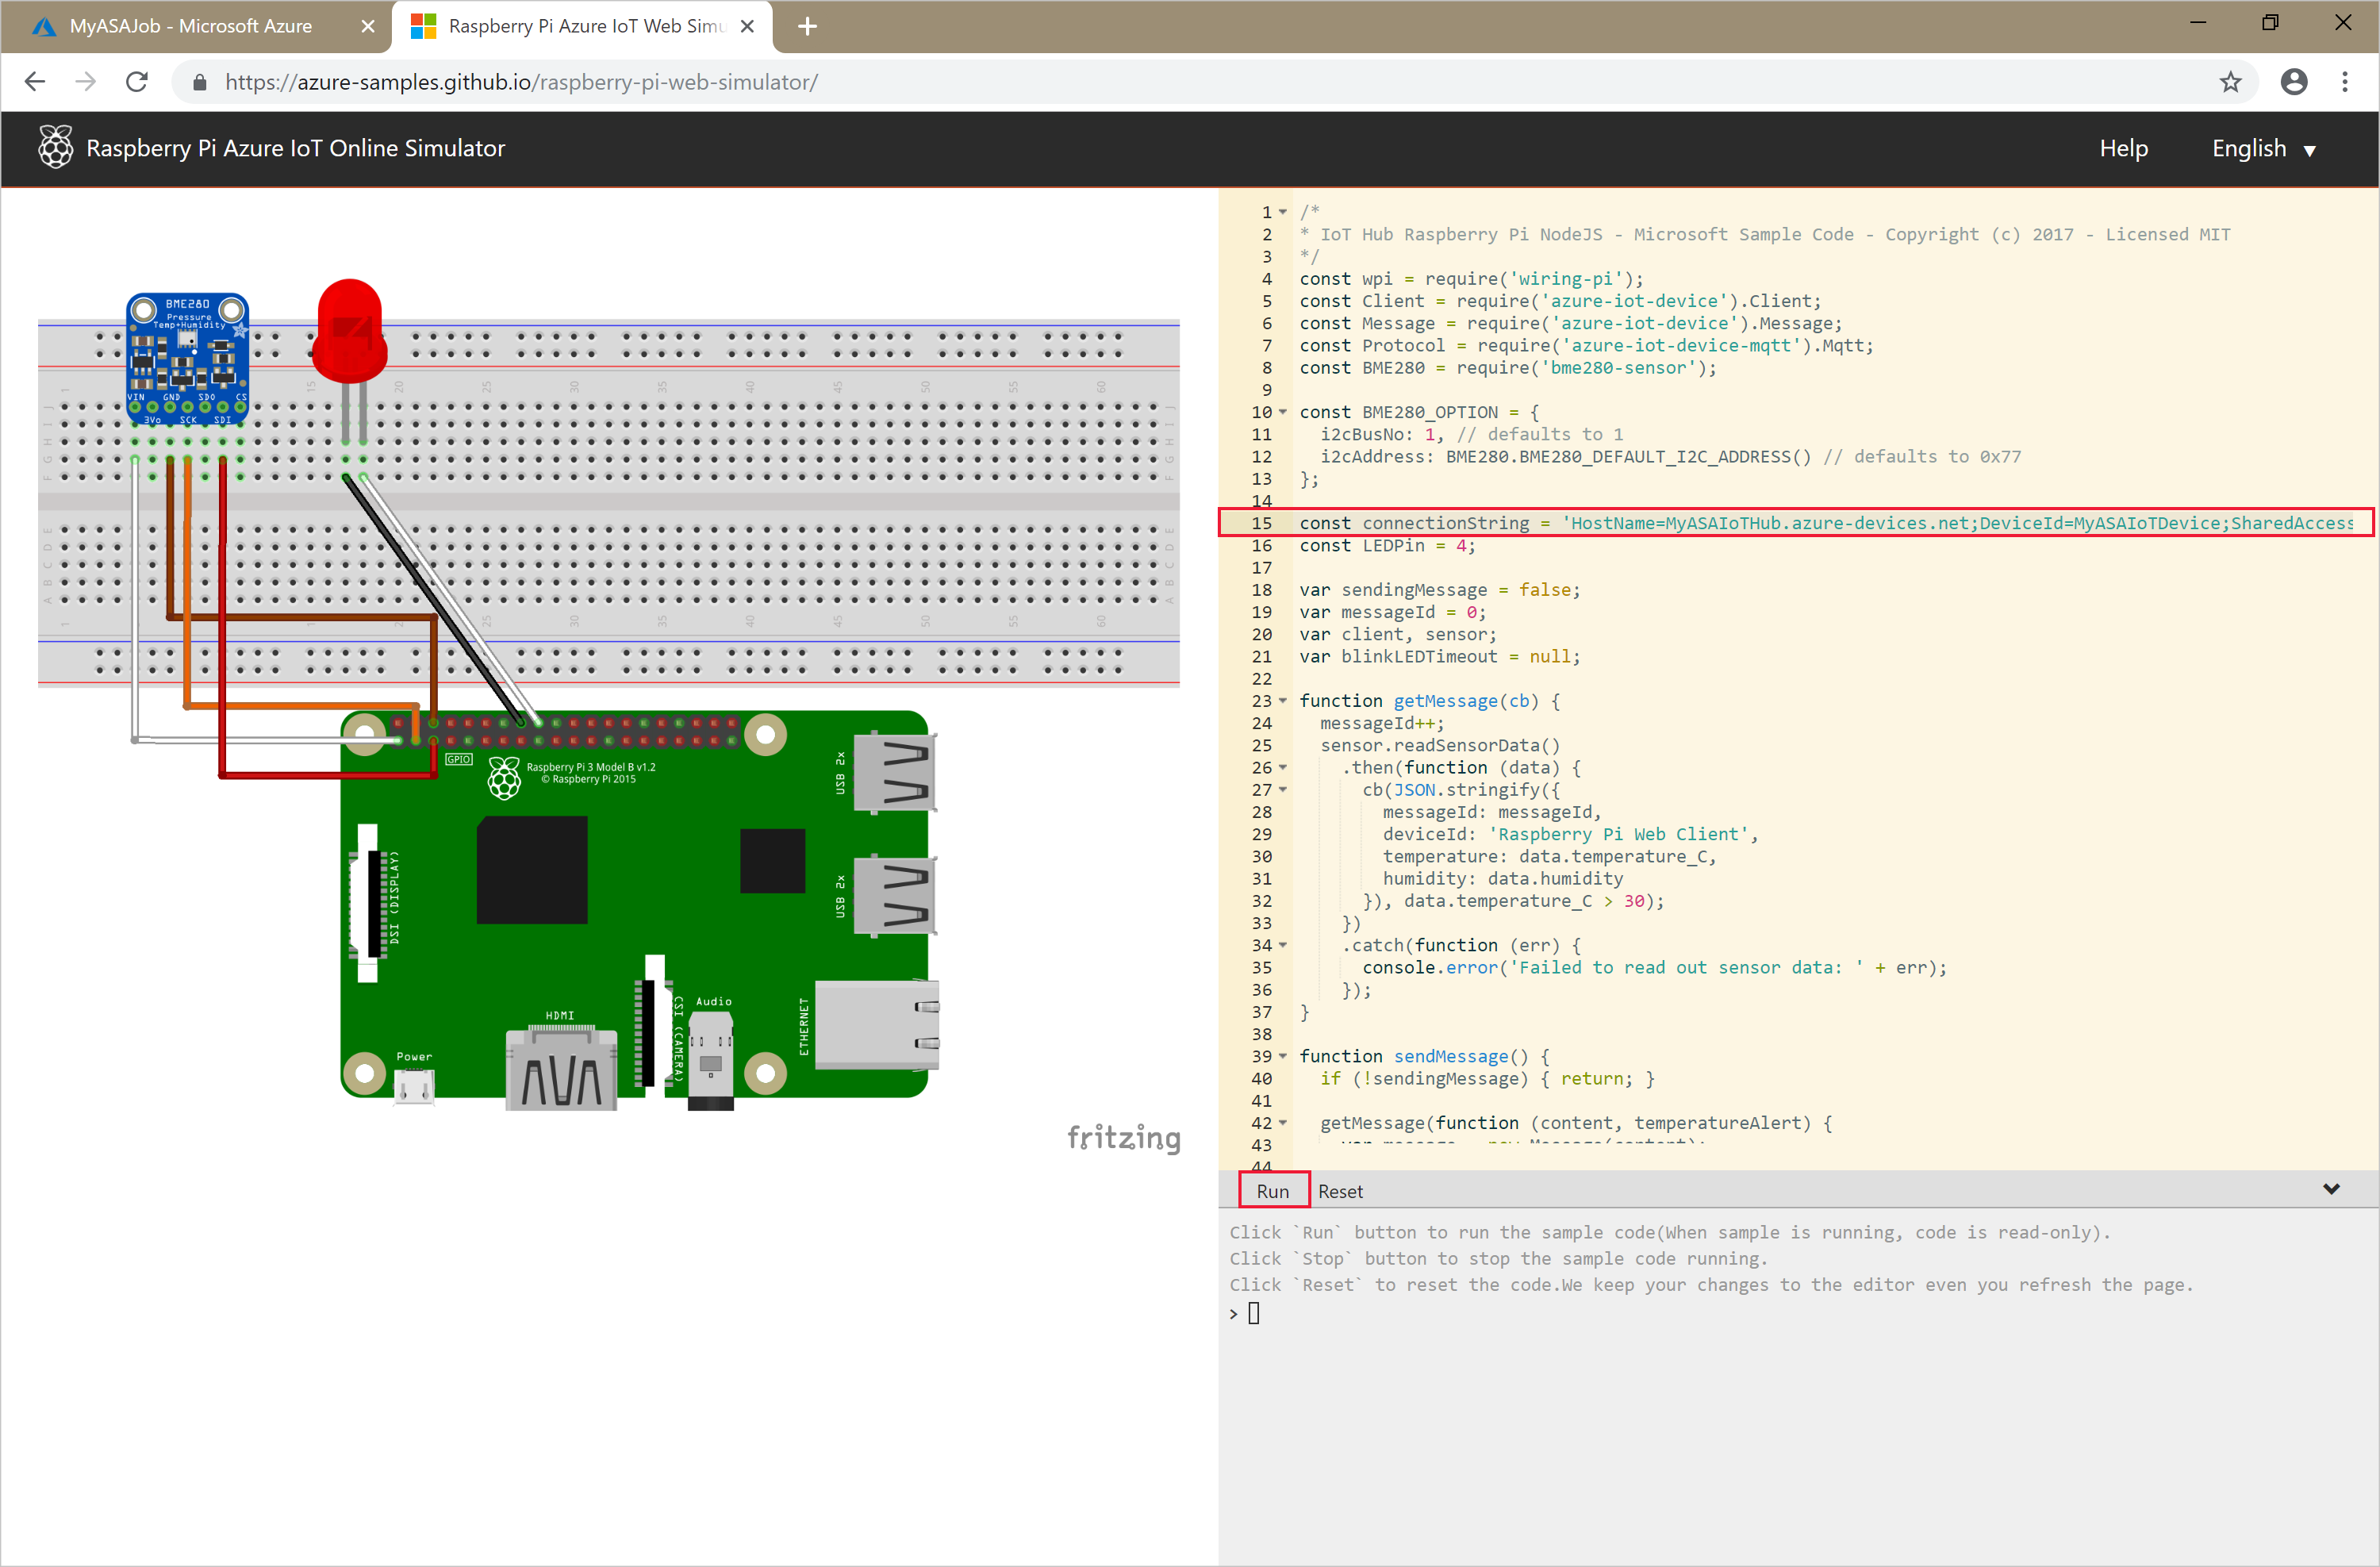 Screenshot showing the Raspberry Pi Azure IoT Online Simulator.